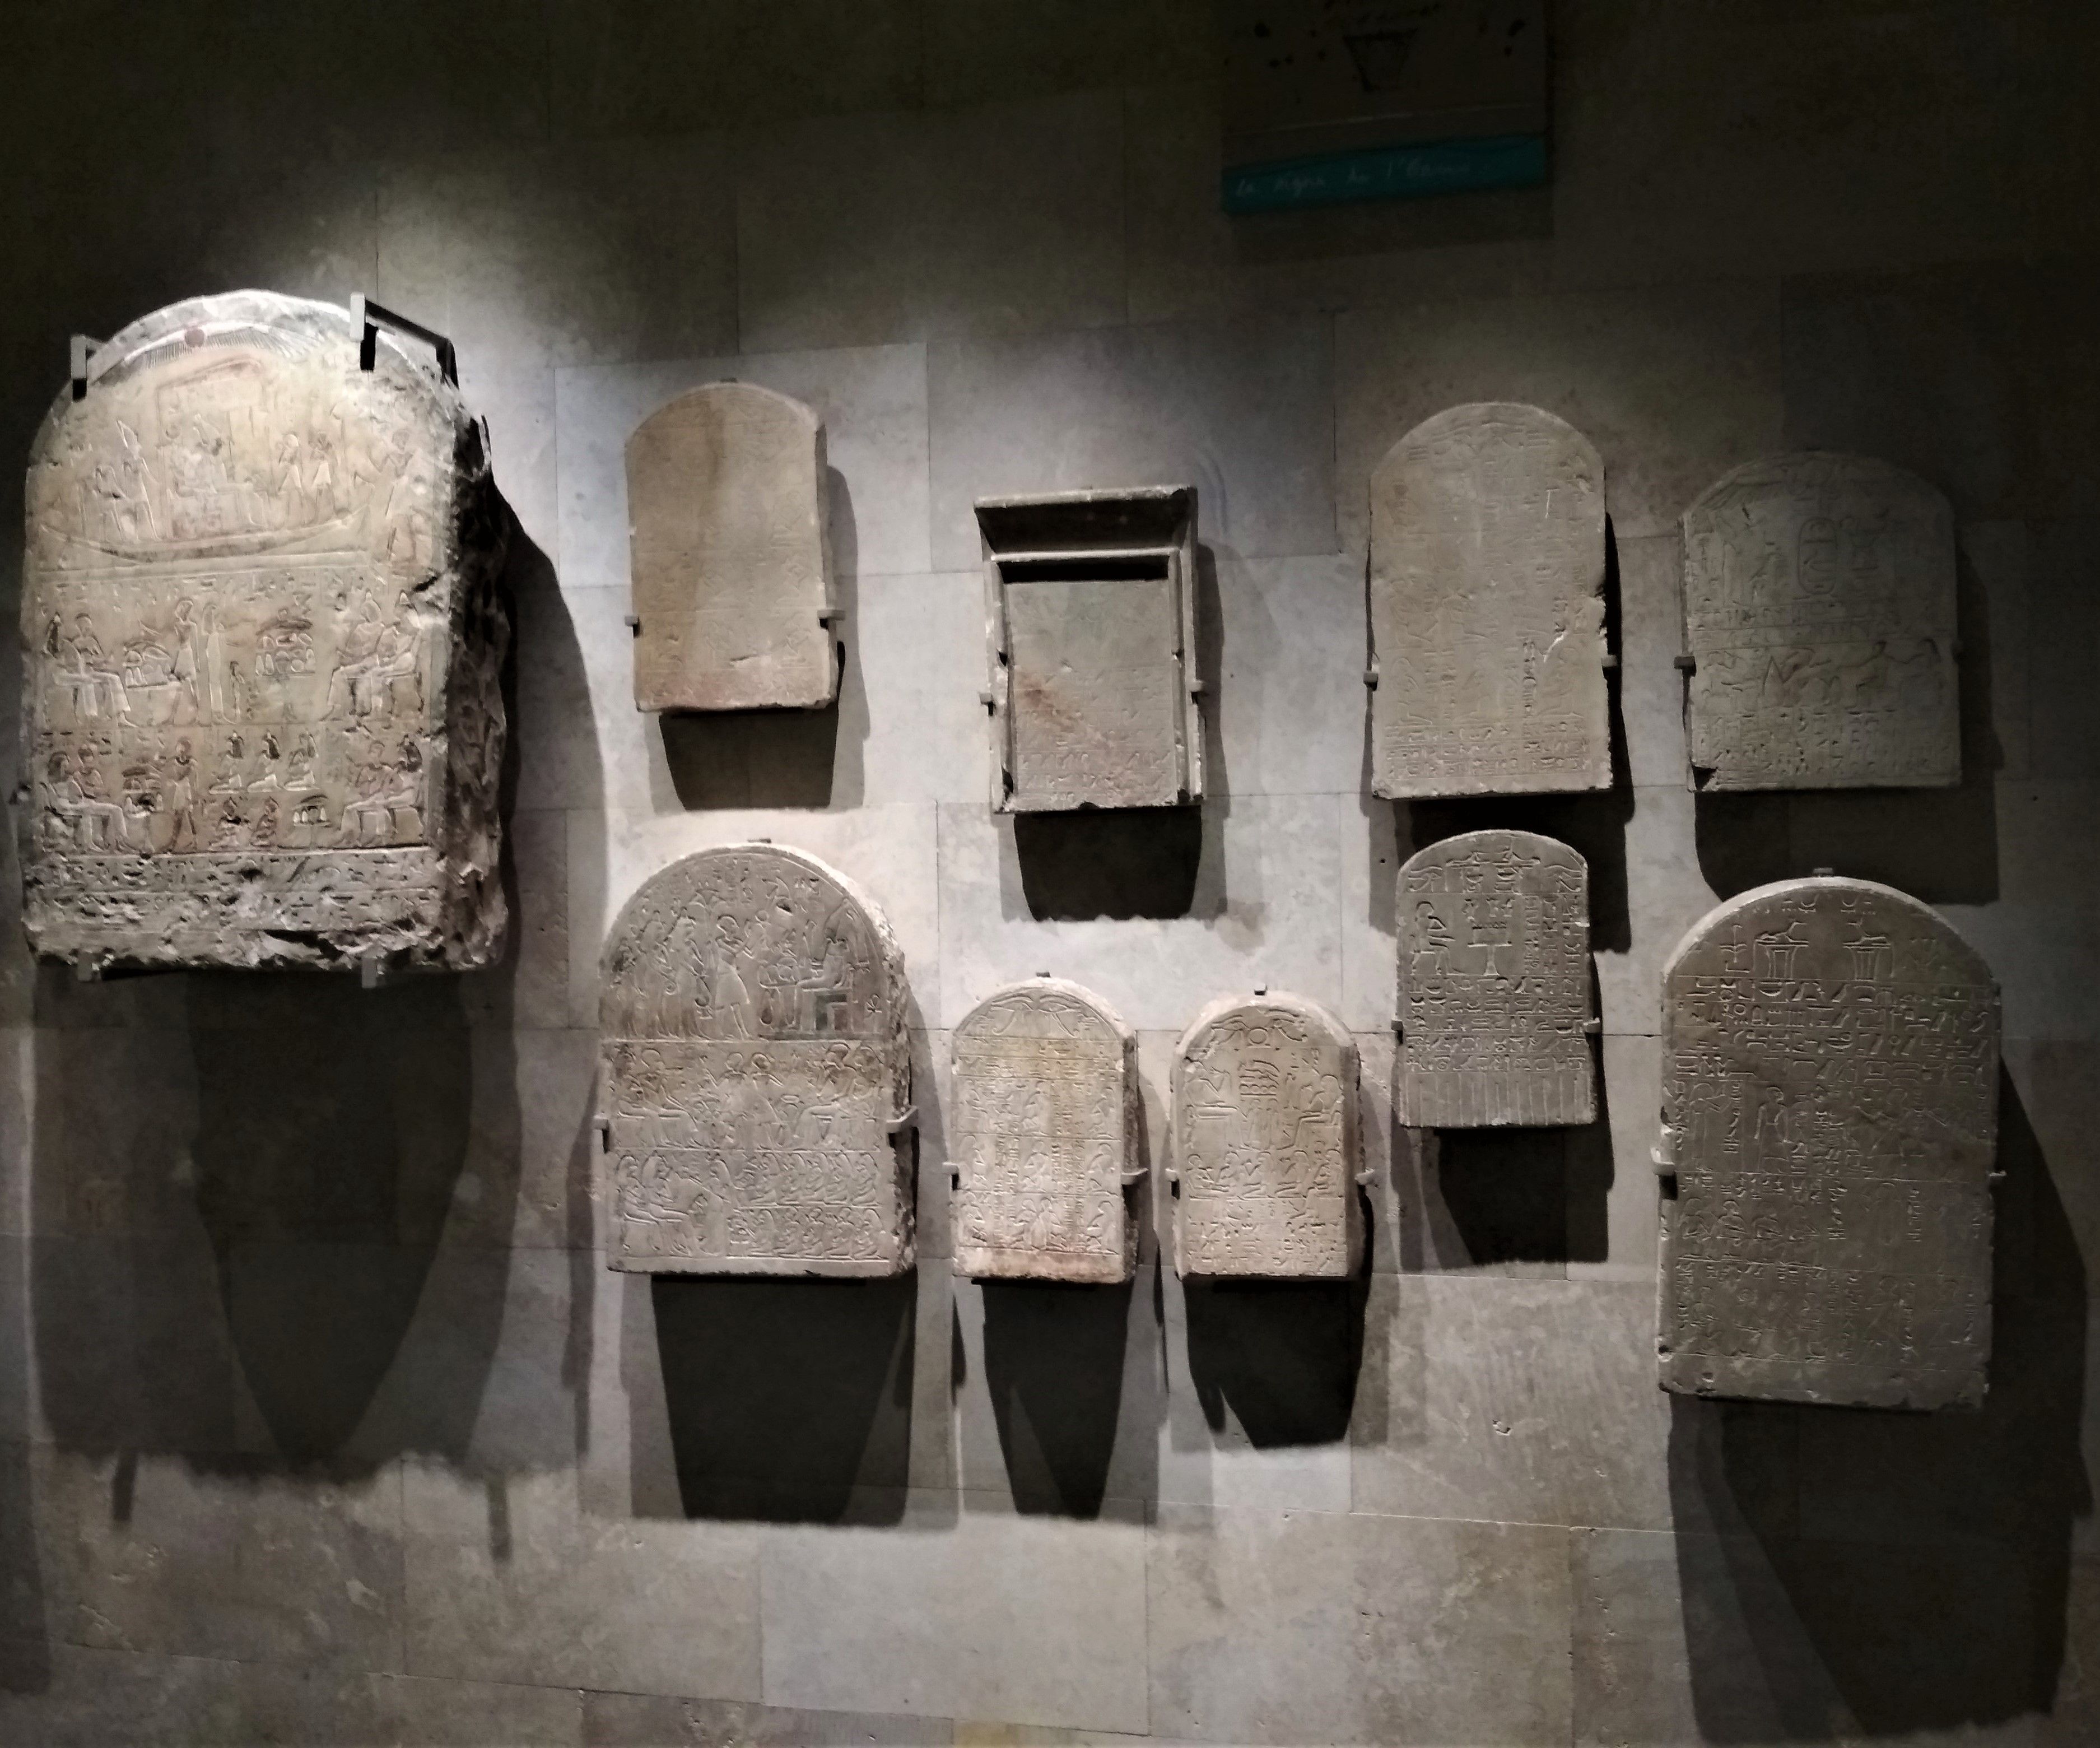 Musée d'archéologie méditerranéenne, Marseille: All Year